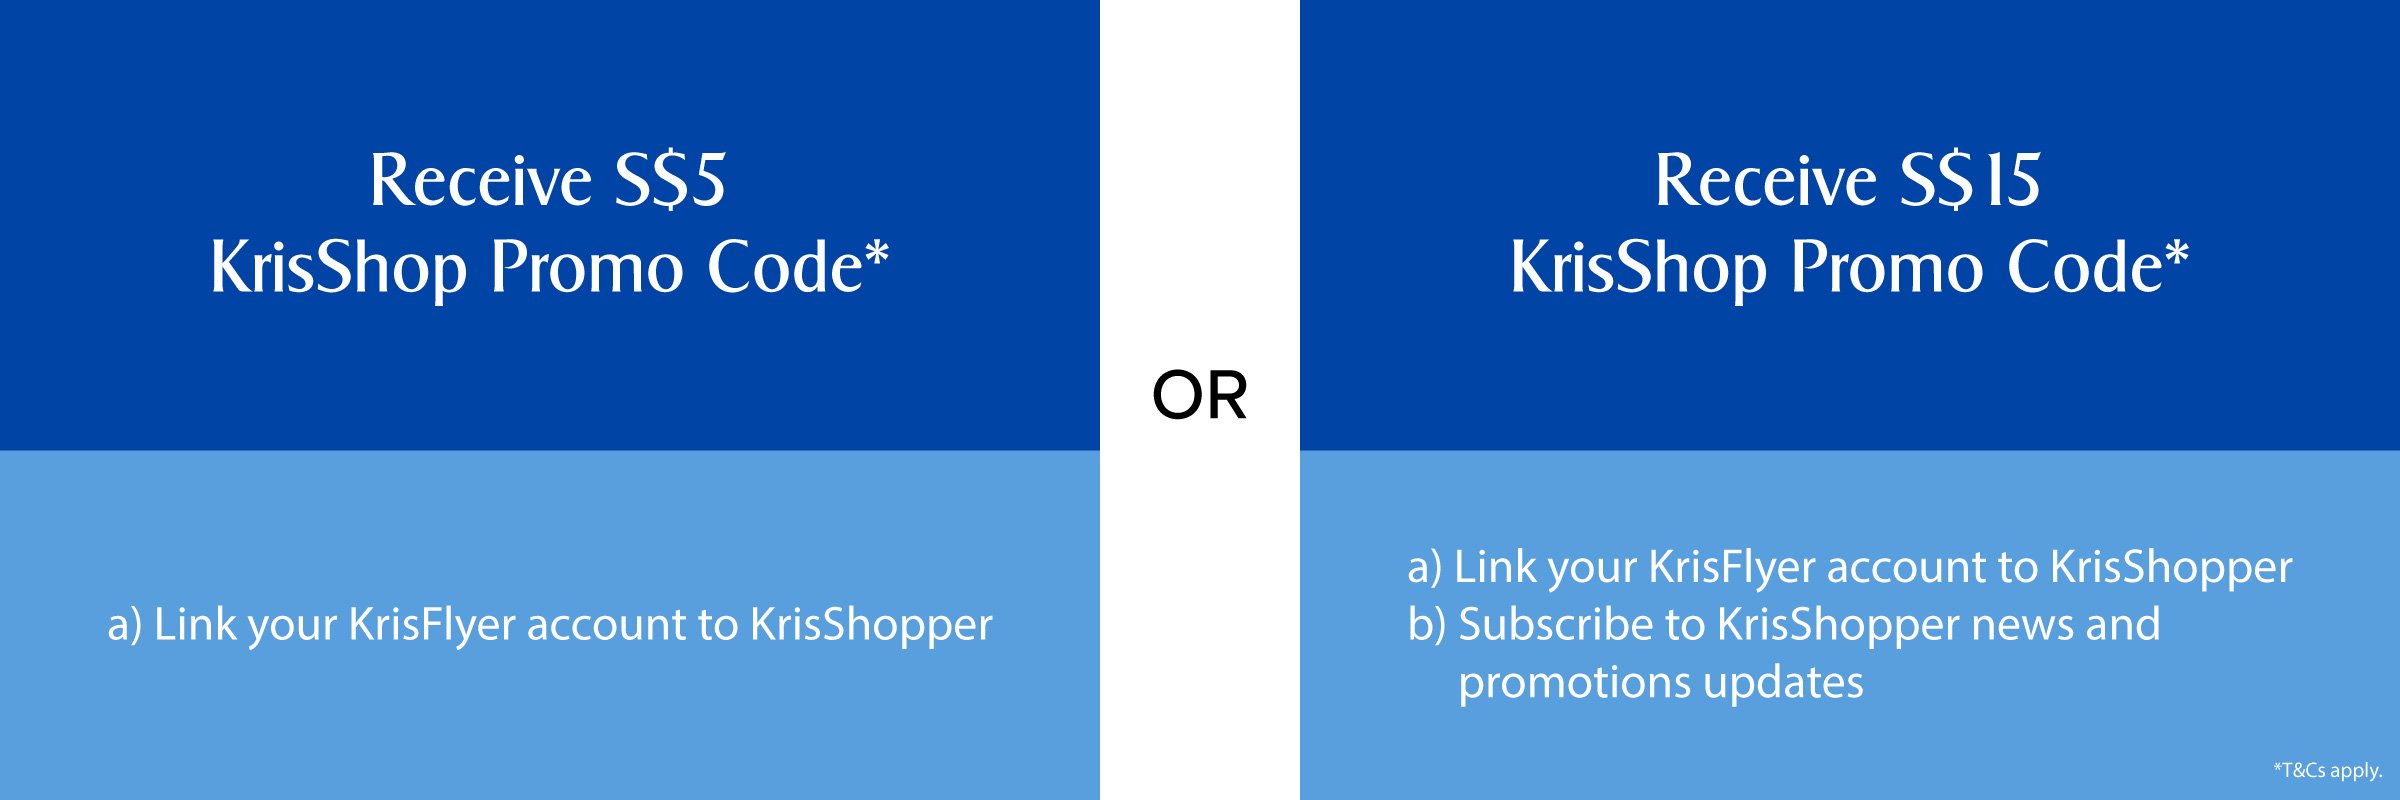 KrisShopper's Welcome Bonus - Up to S$15 off promo code